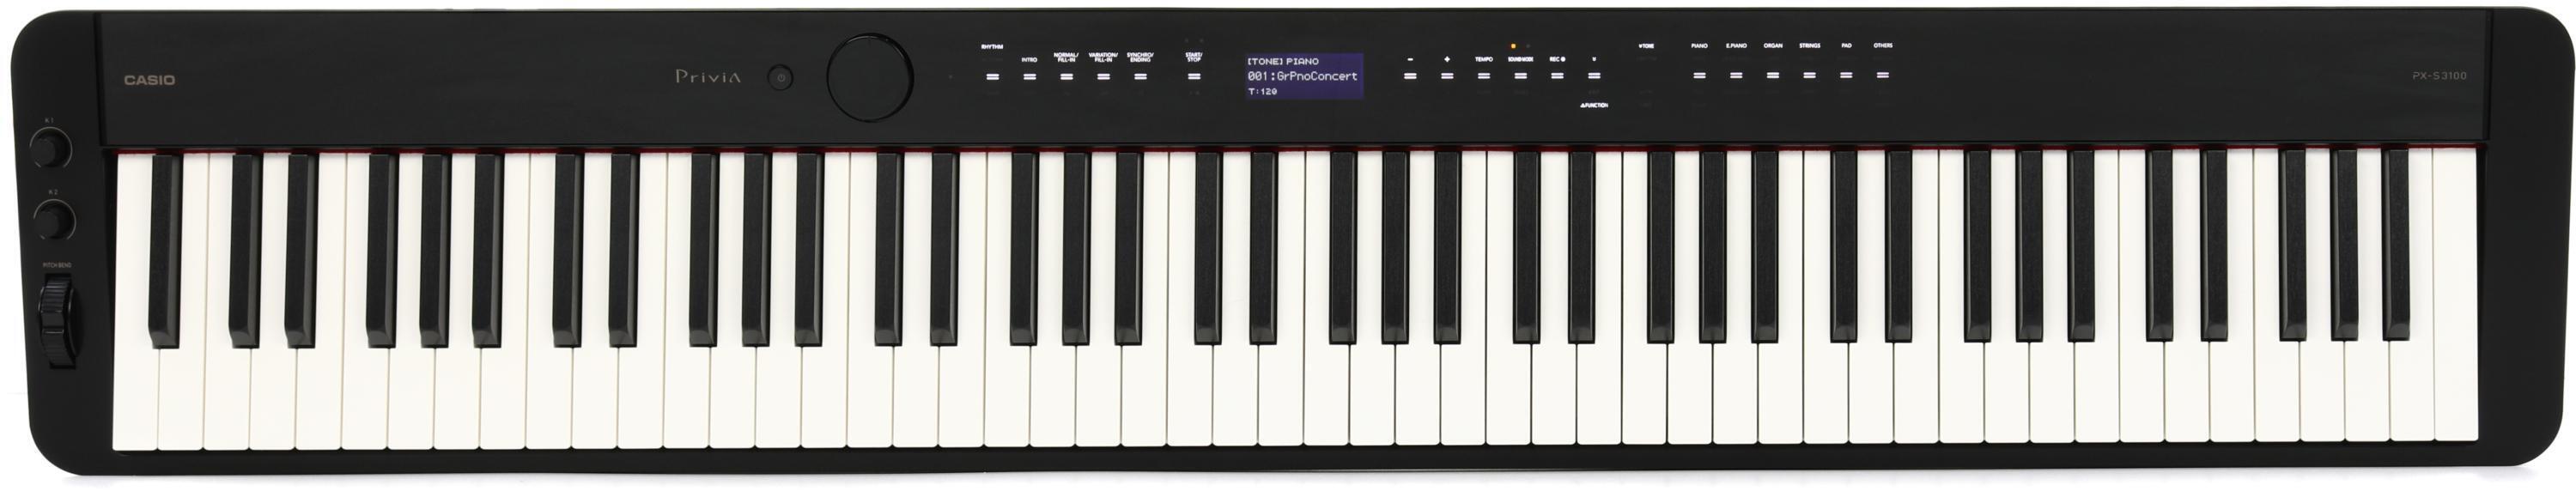 Bundled Item: Casio Privia PX-S3100 88-key Digital Piano - Black